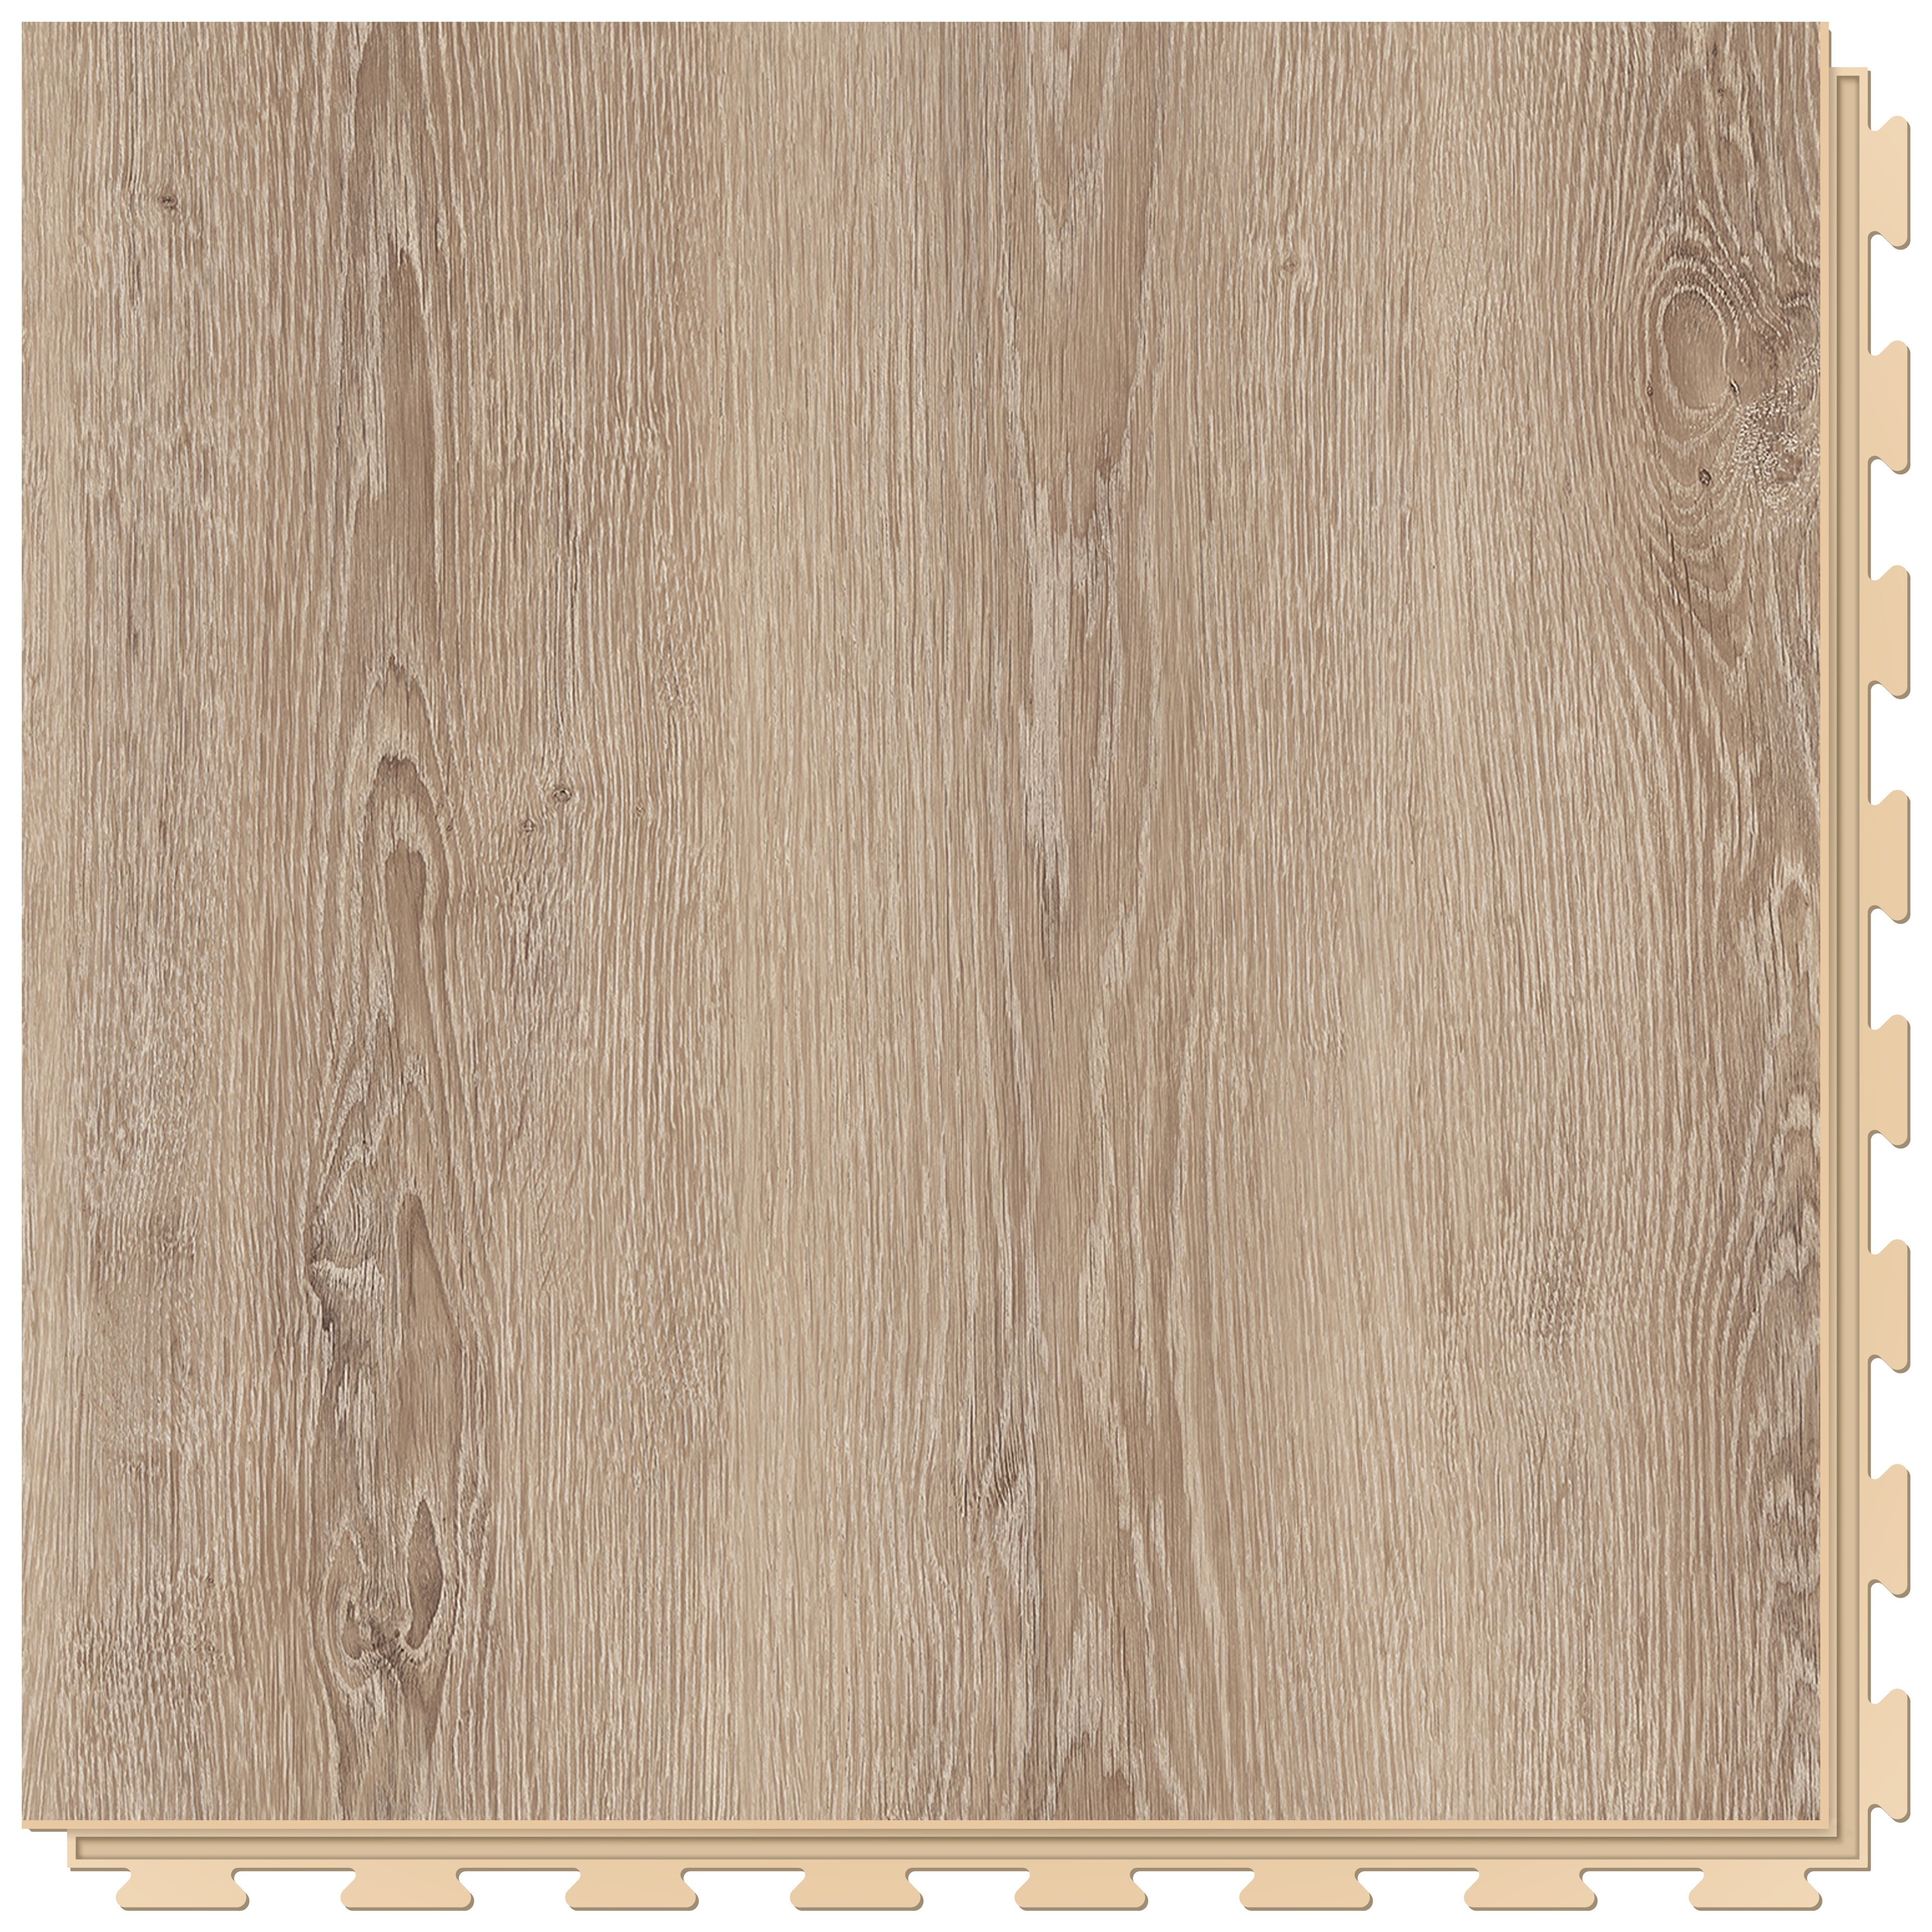 Hnedá PVC vinylová dlažba Fortelock Business Tyrolean oak W001 Beige - dĺžka 66,8 cm, šírka 66,8 cm, výška 0,7 cm